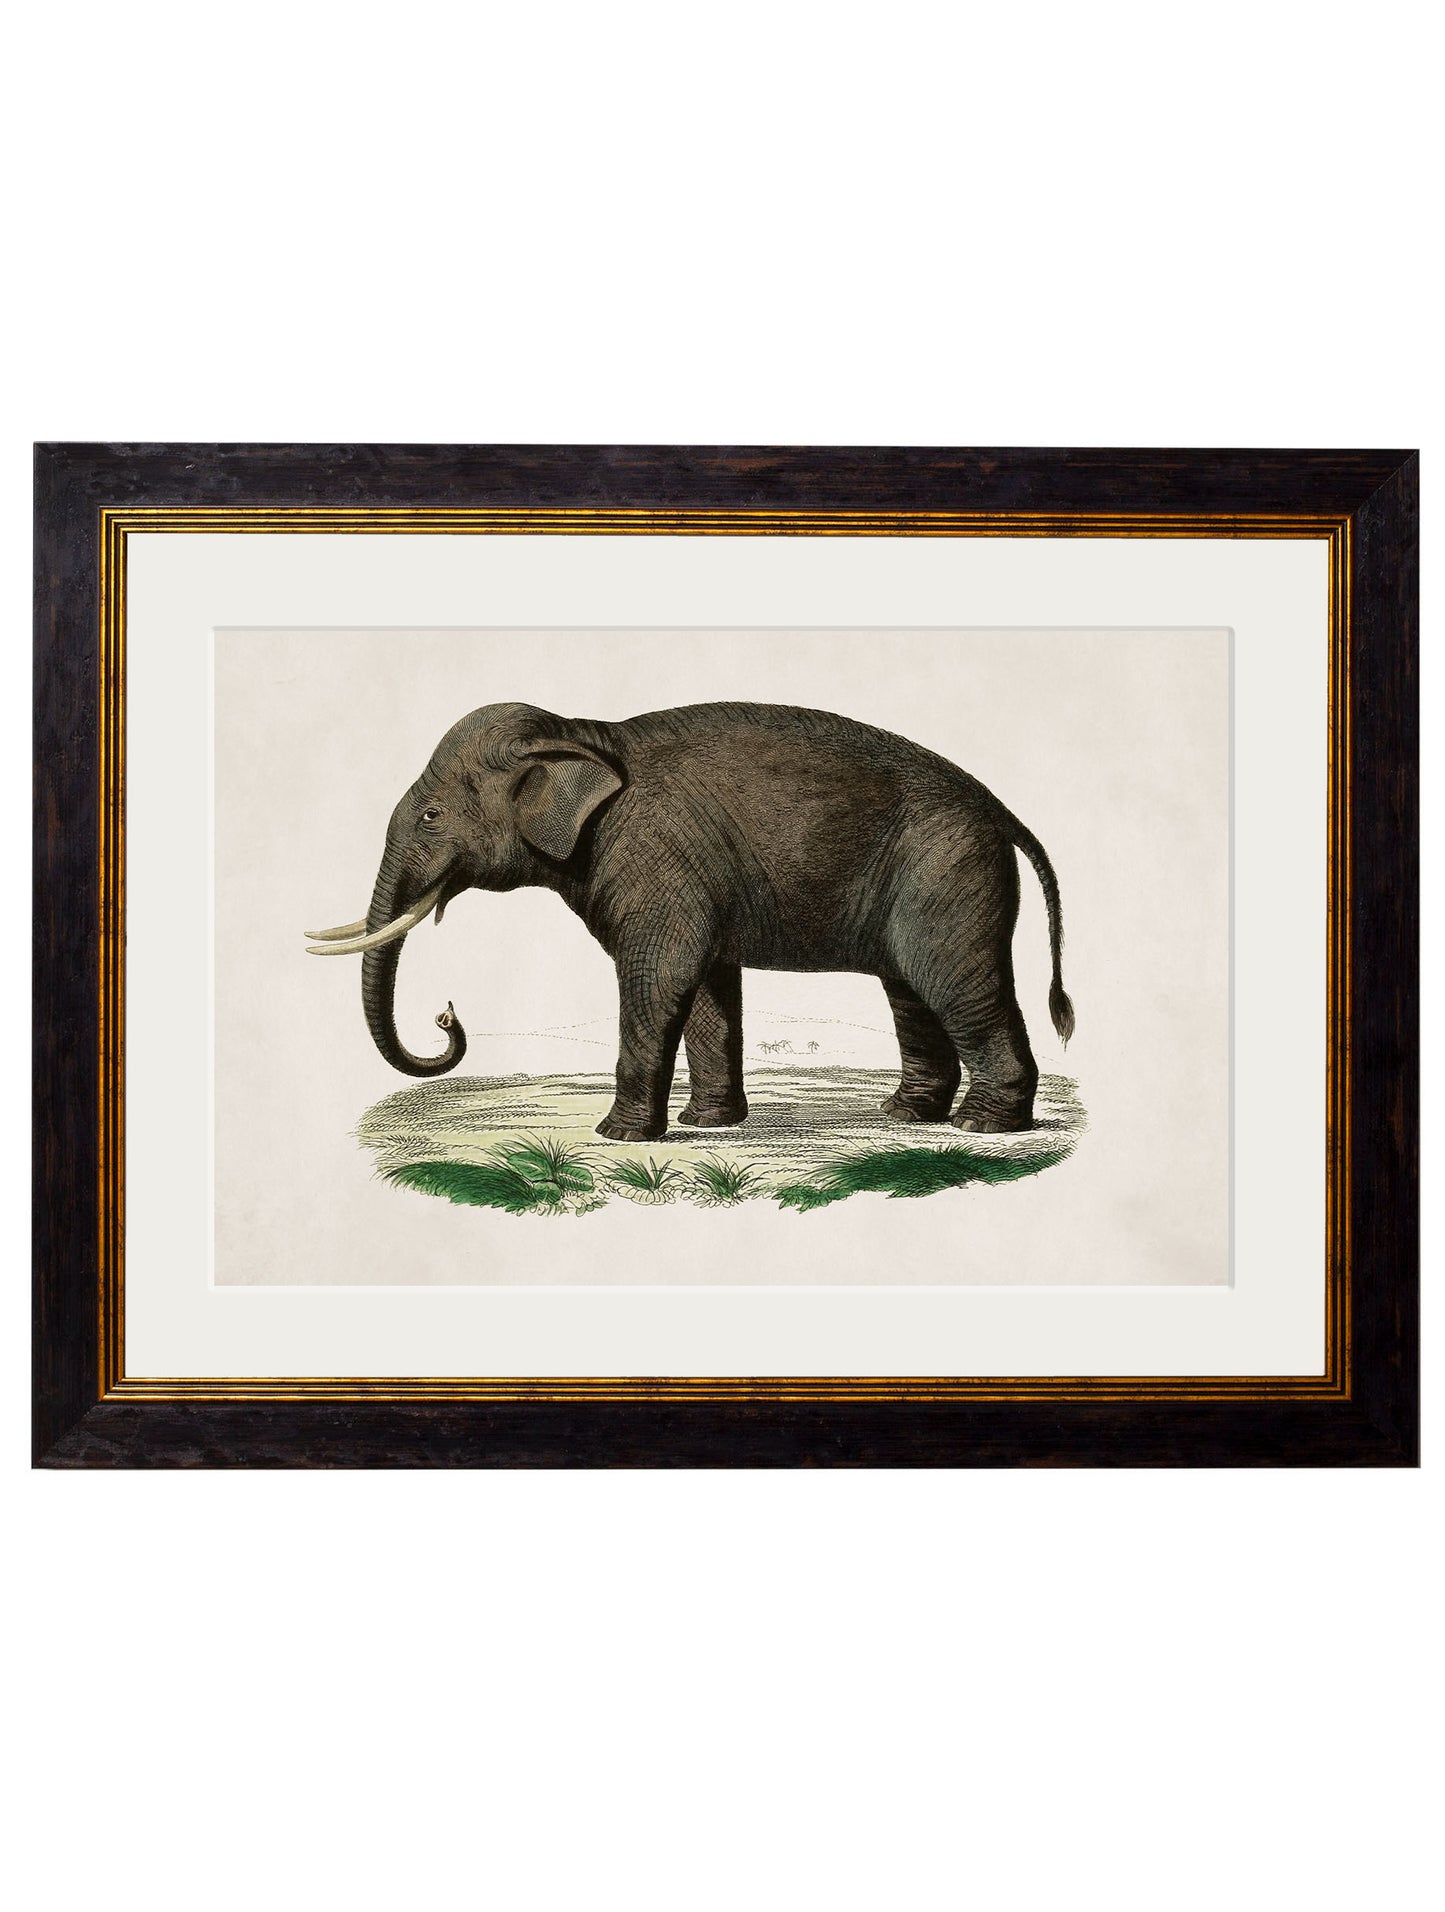 Framed Elephant Prints (Set of Two)